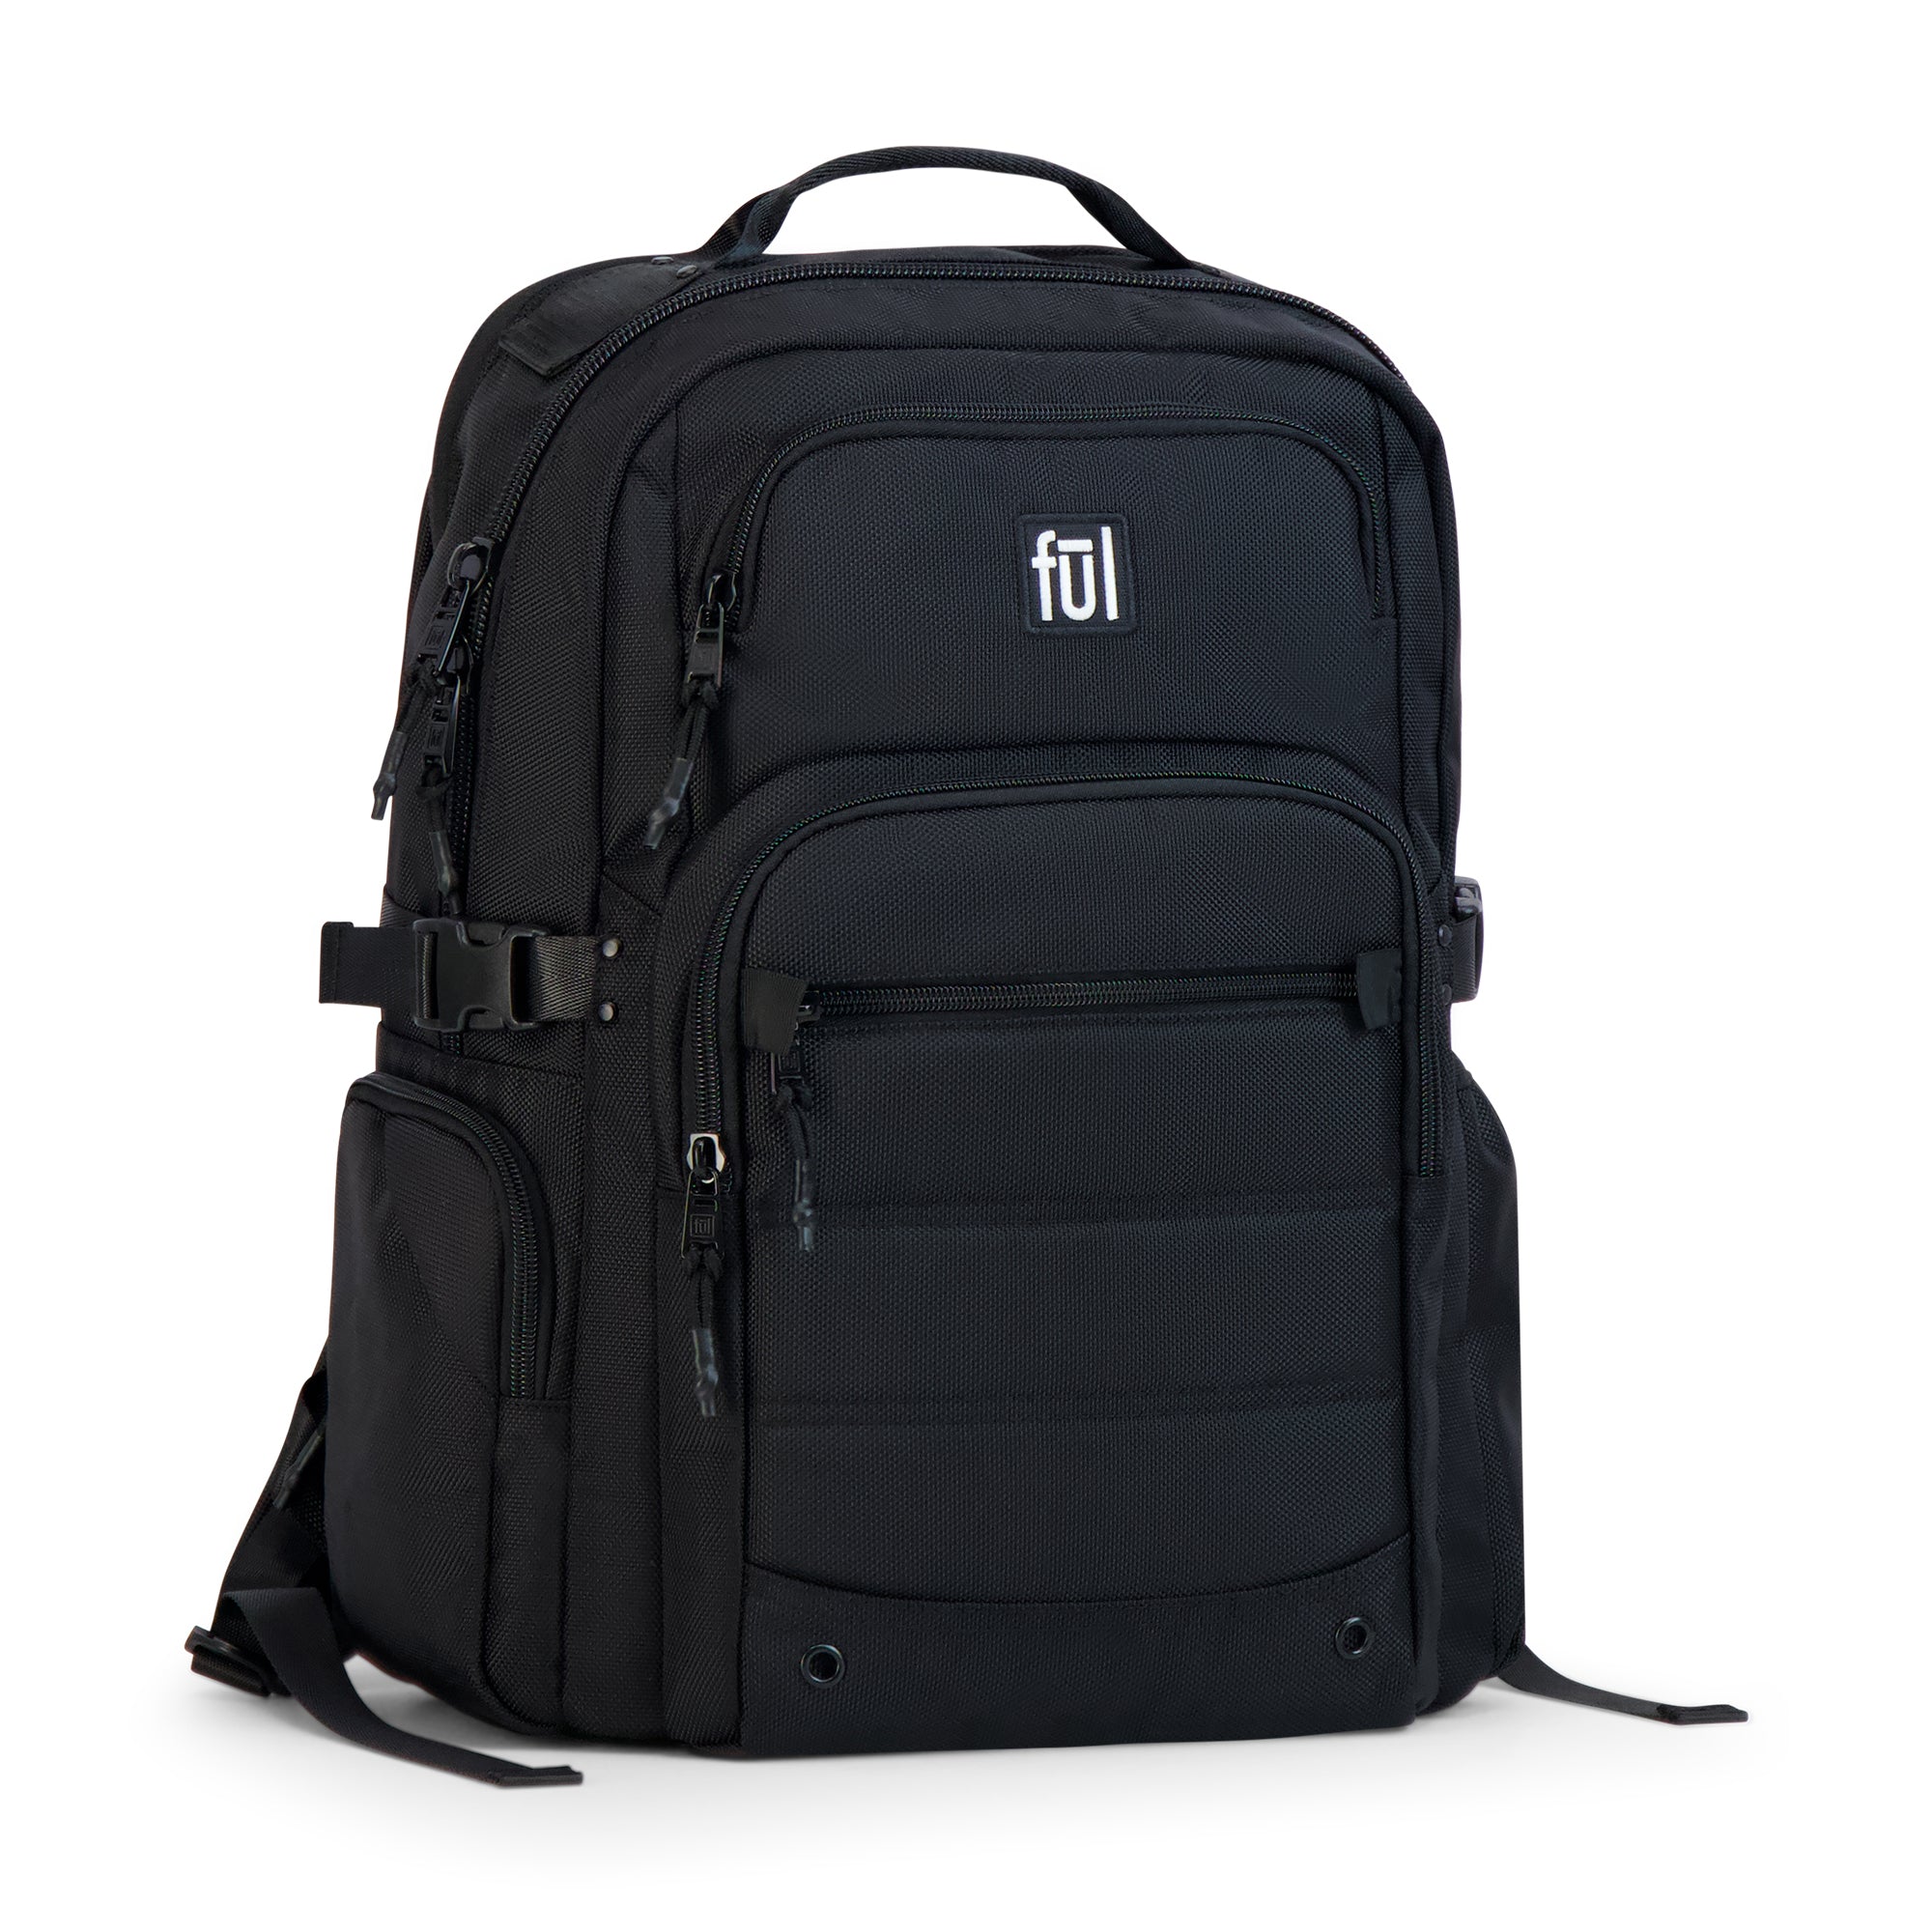 FUL Division Laptop Backpack